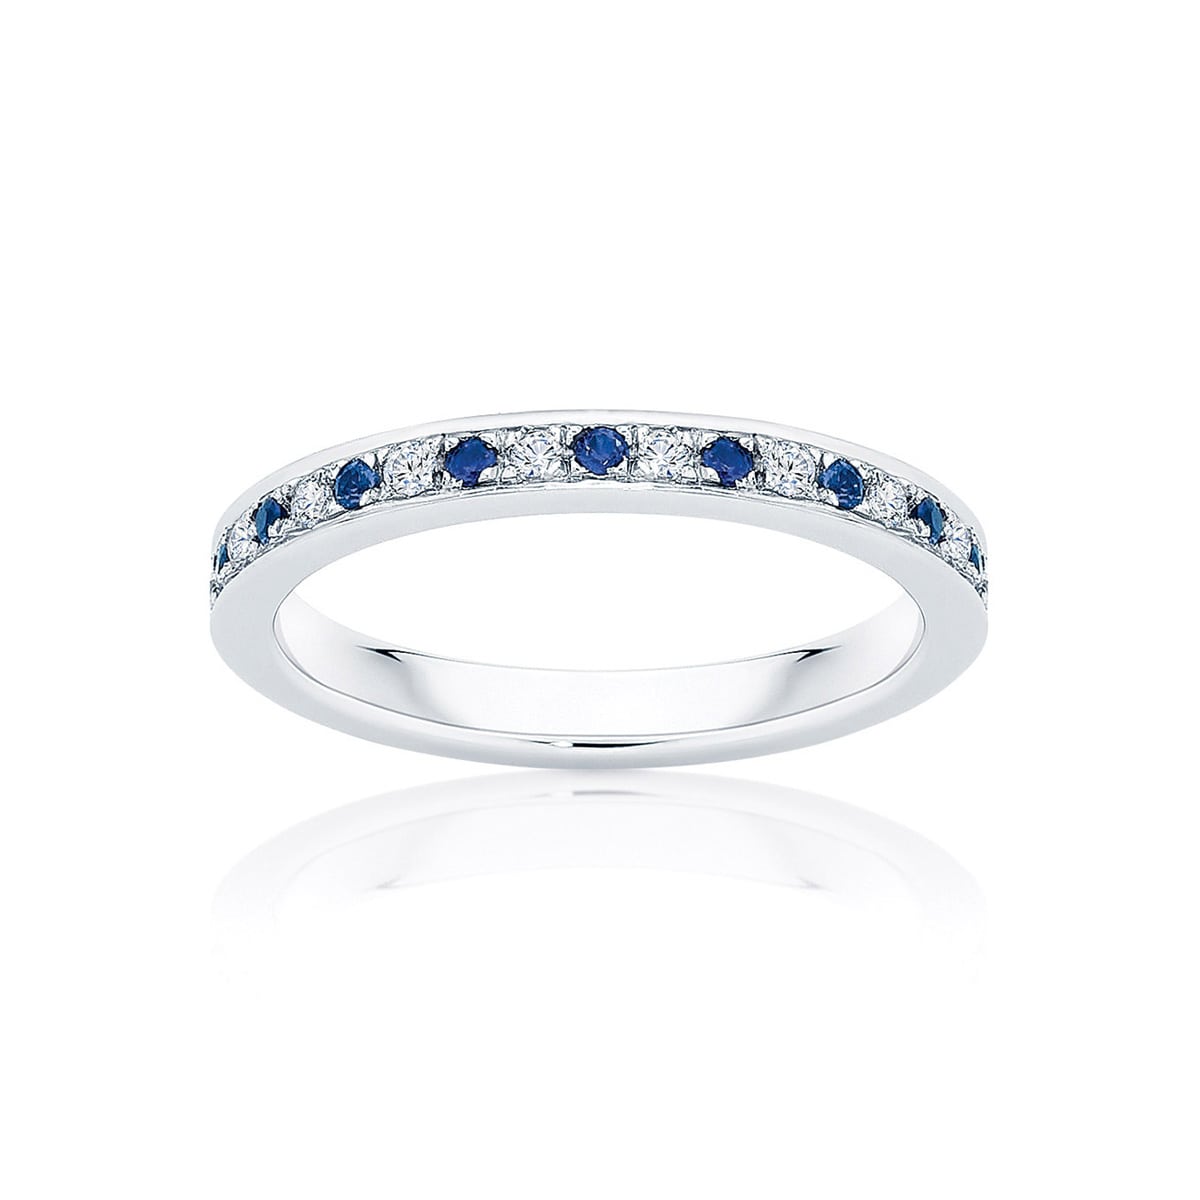 Womens Diamond and Sapphire Wedding Ring in Platinum | Santorini